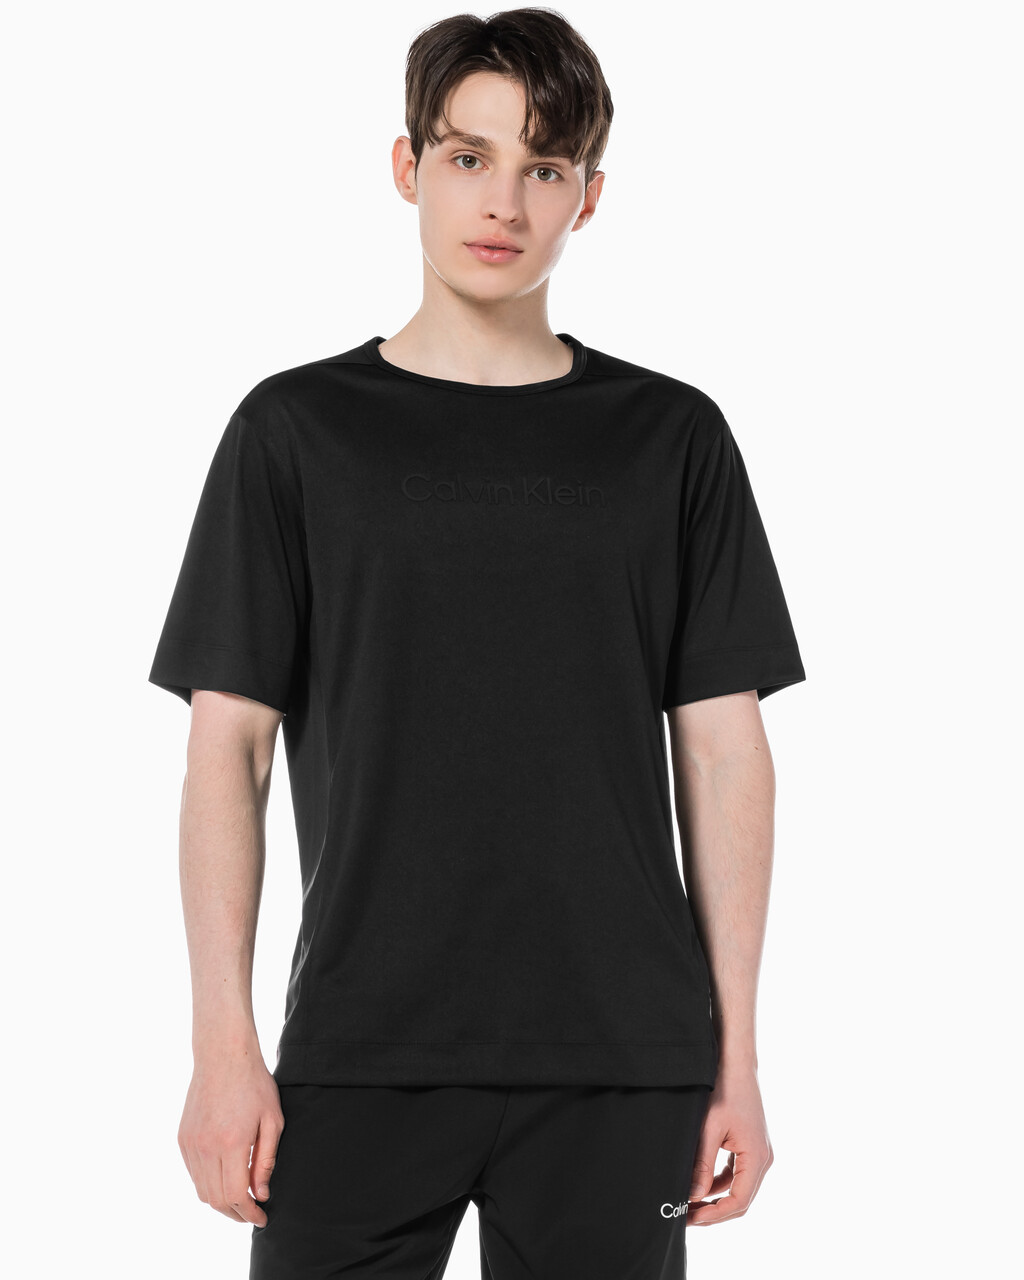 Buy 남성 레귤러 핏 에센셜 스트레치 기능성 반팔 티셔츠 in color BLACK